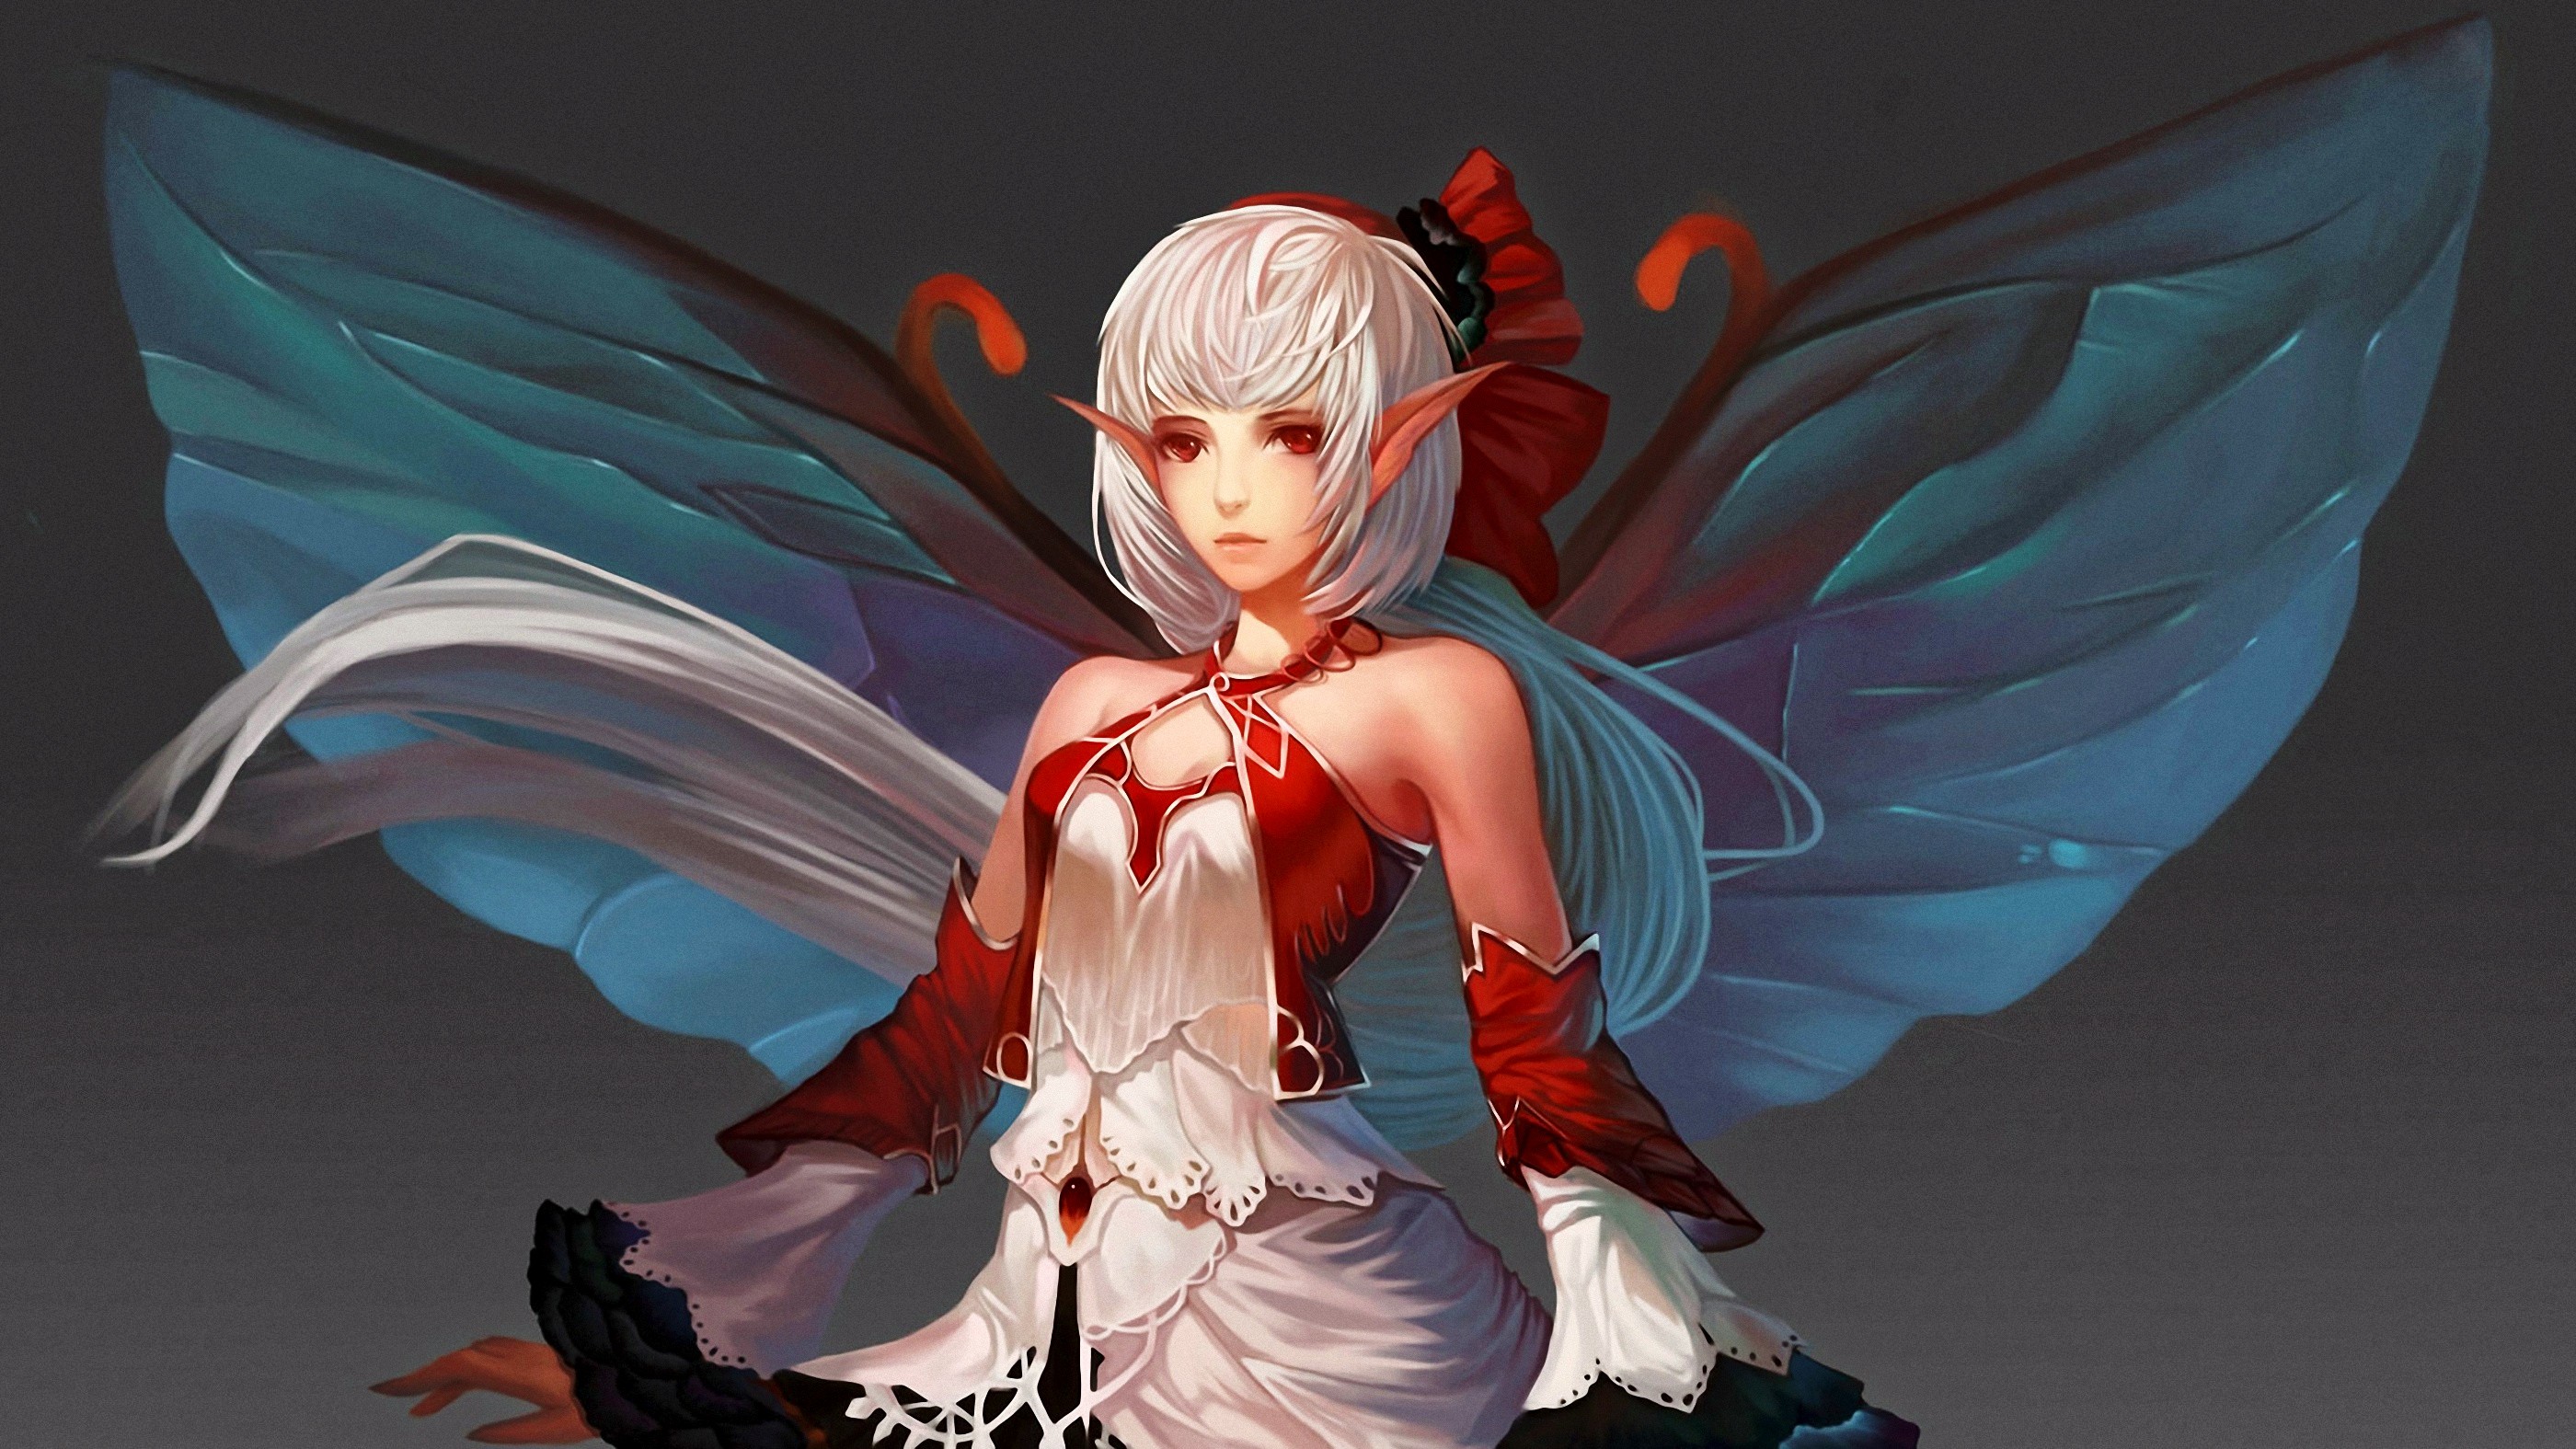 General 2800x1575 fantasy art wings gray background fantasy girl women long hair red eyes pointy ears